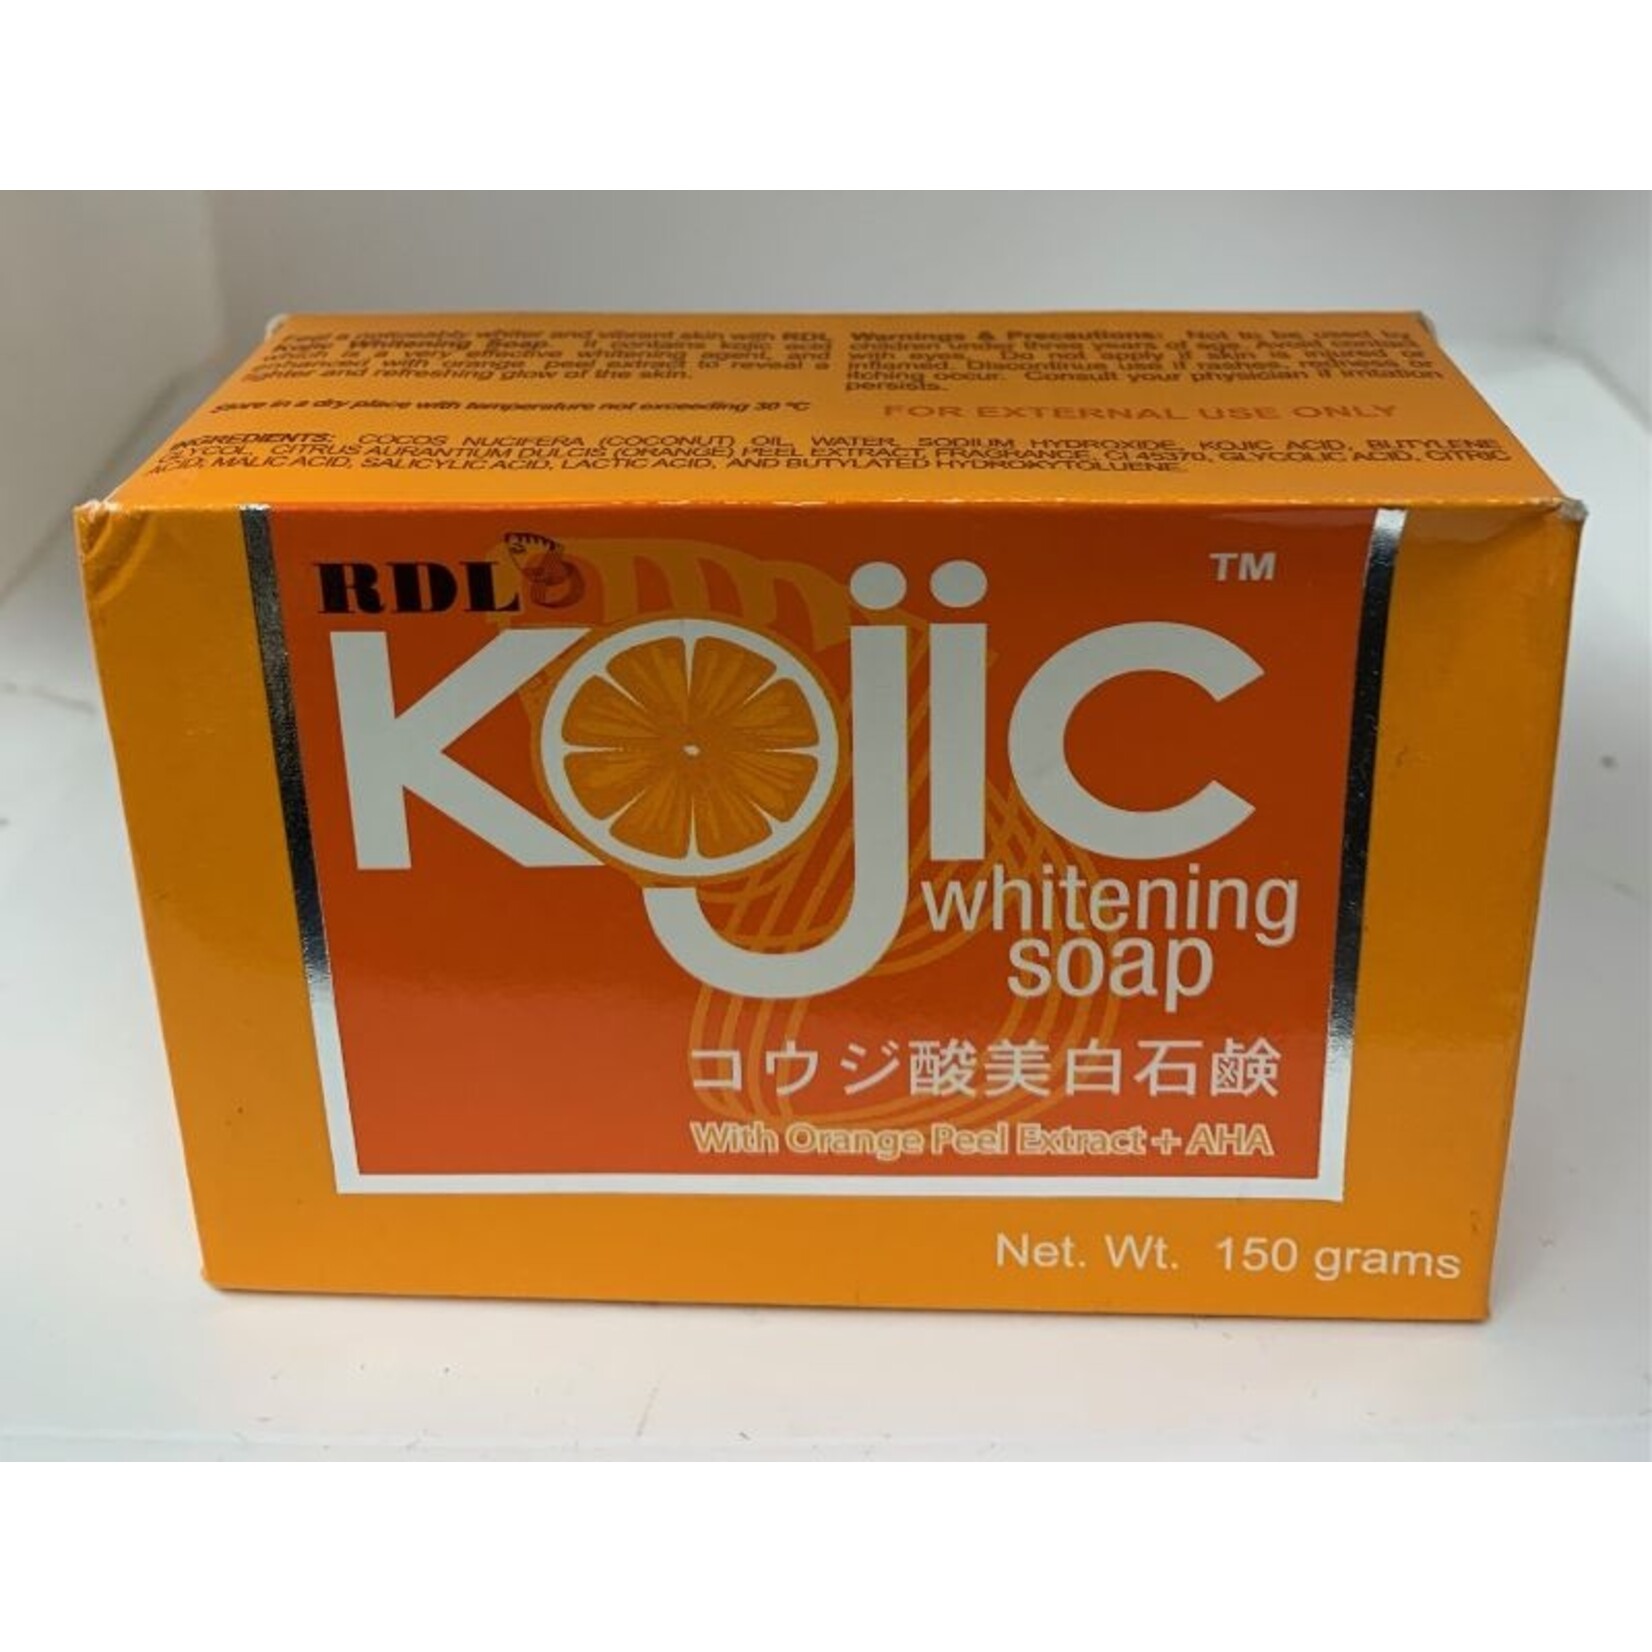 RDL RDL Kojic Whitening Soap met Orange peel Extract + AHA, 150 gram